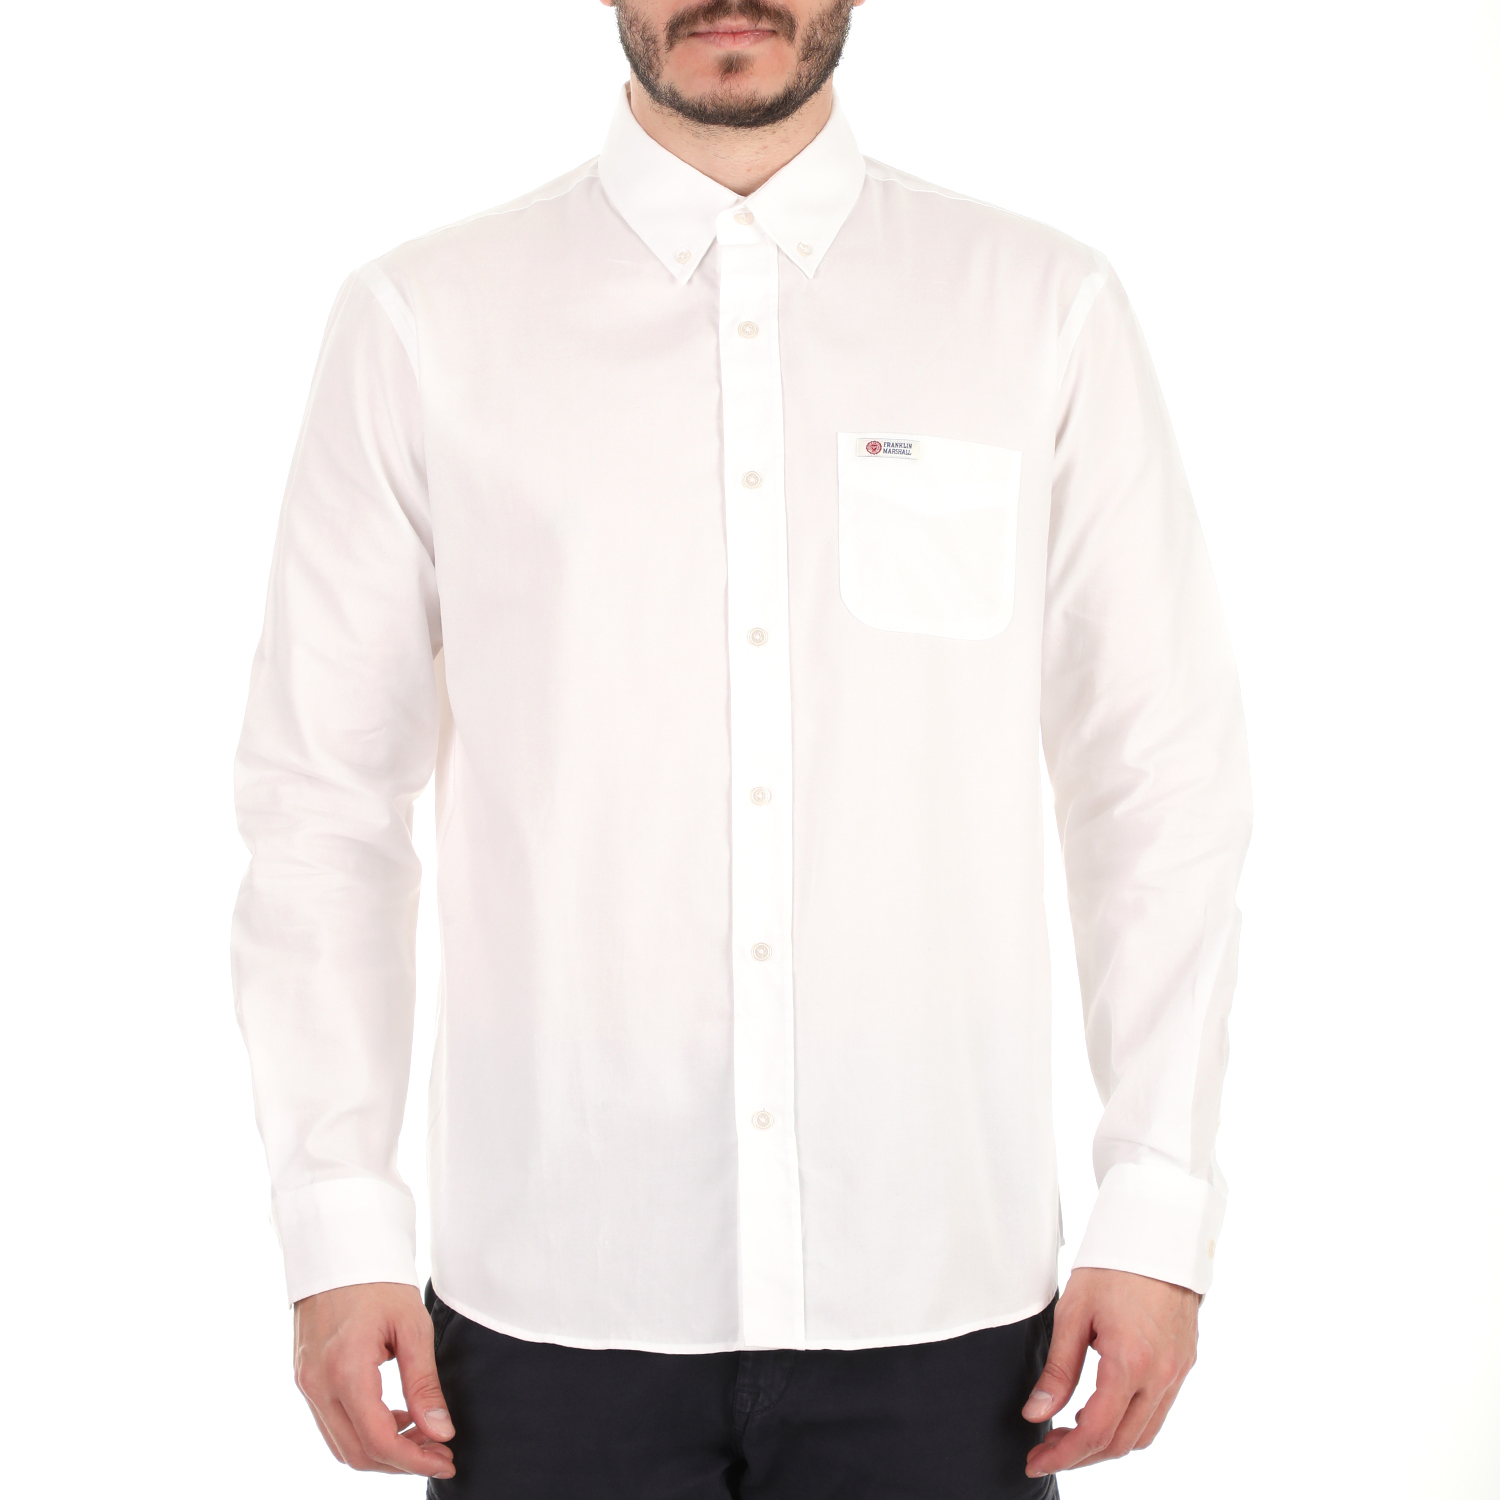 FRANKLIN & MARSHALL - Ανδρικό πουκάμισο FRANKLIN & MARSHALL λευκό Ανδρικά/Ρούχα/Πουκάμισα/Μακρυμάνικα